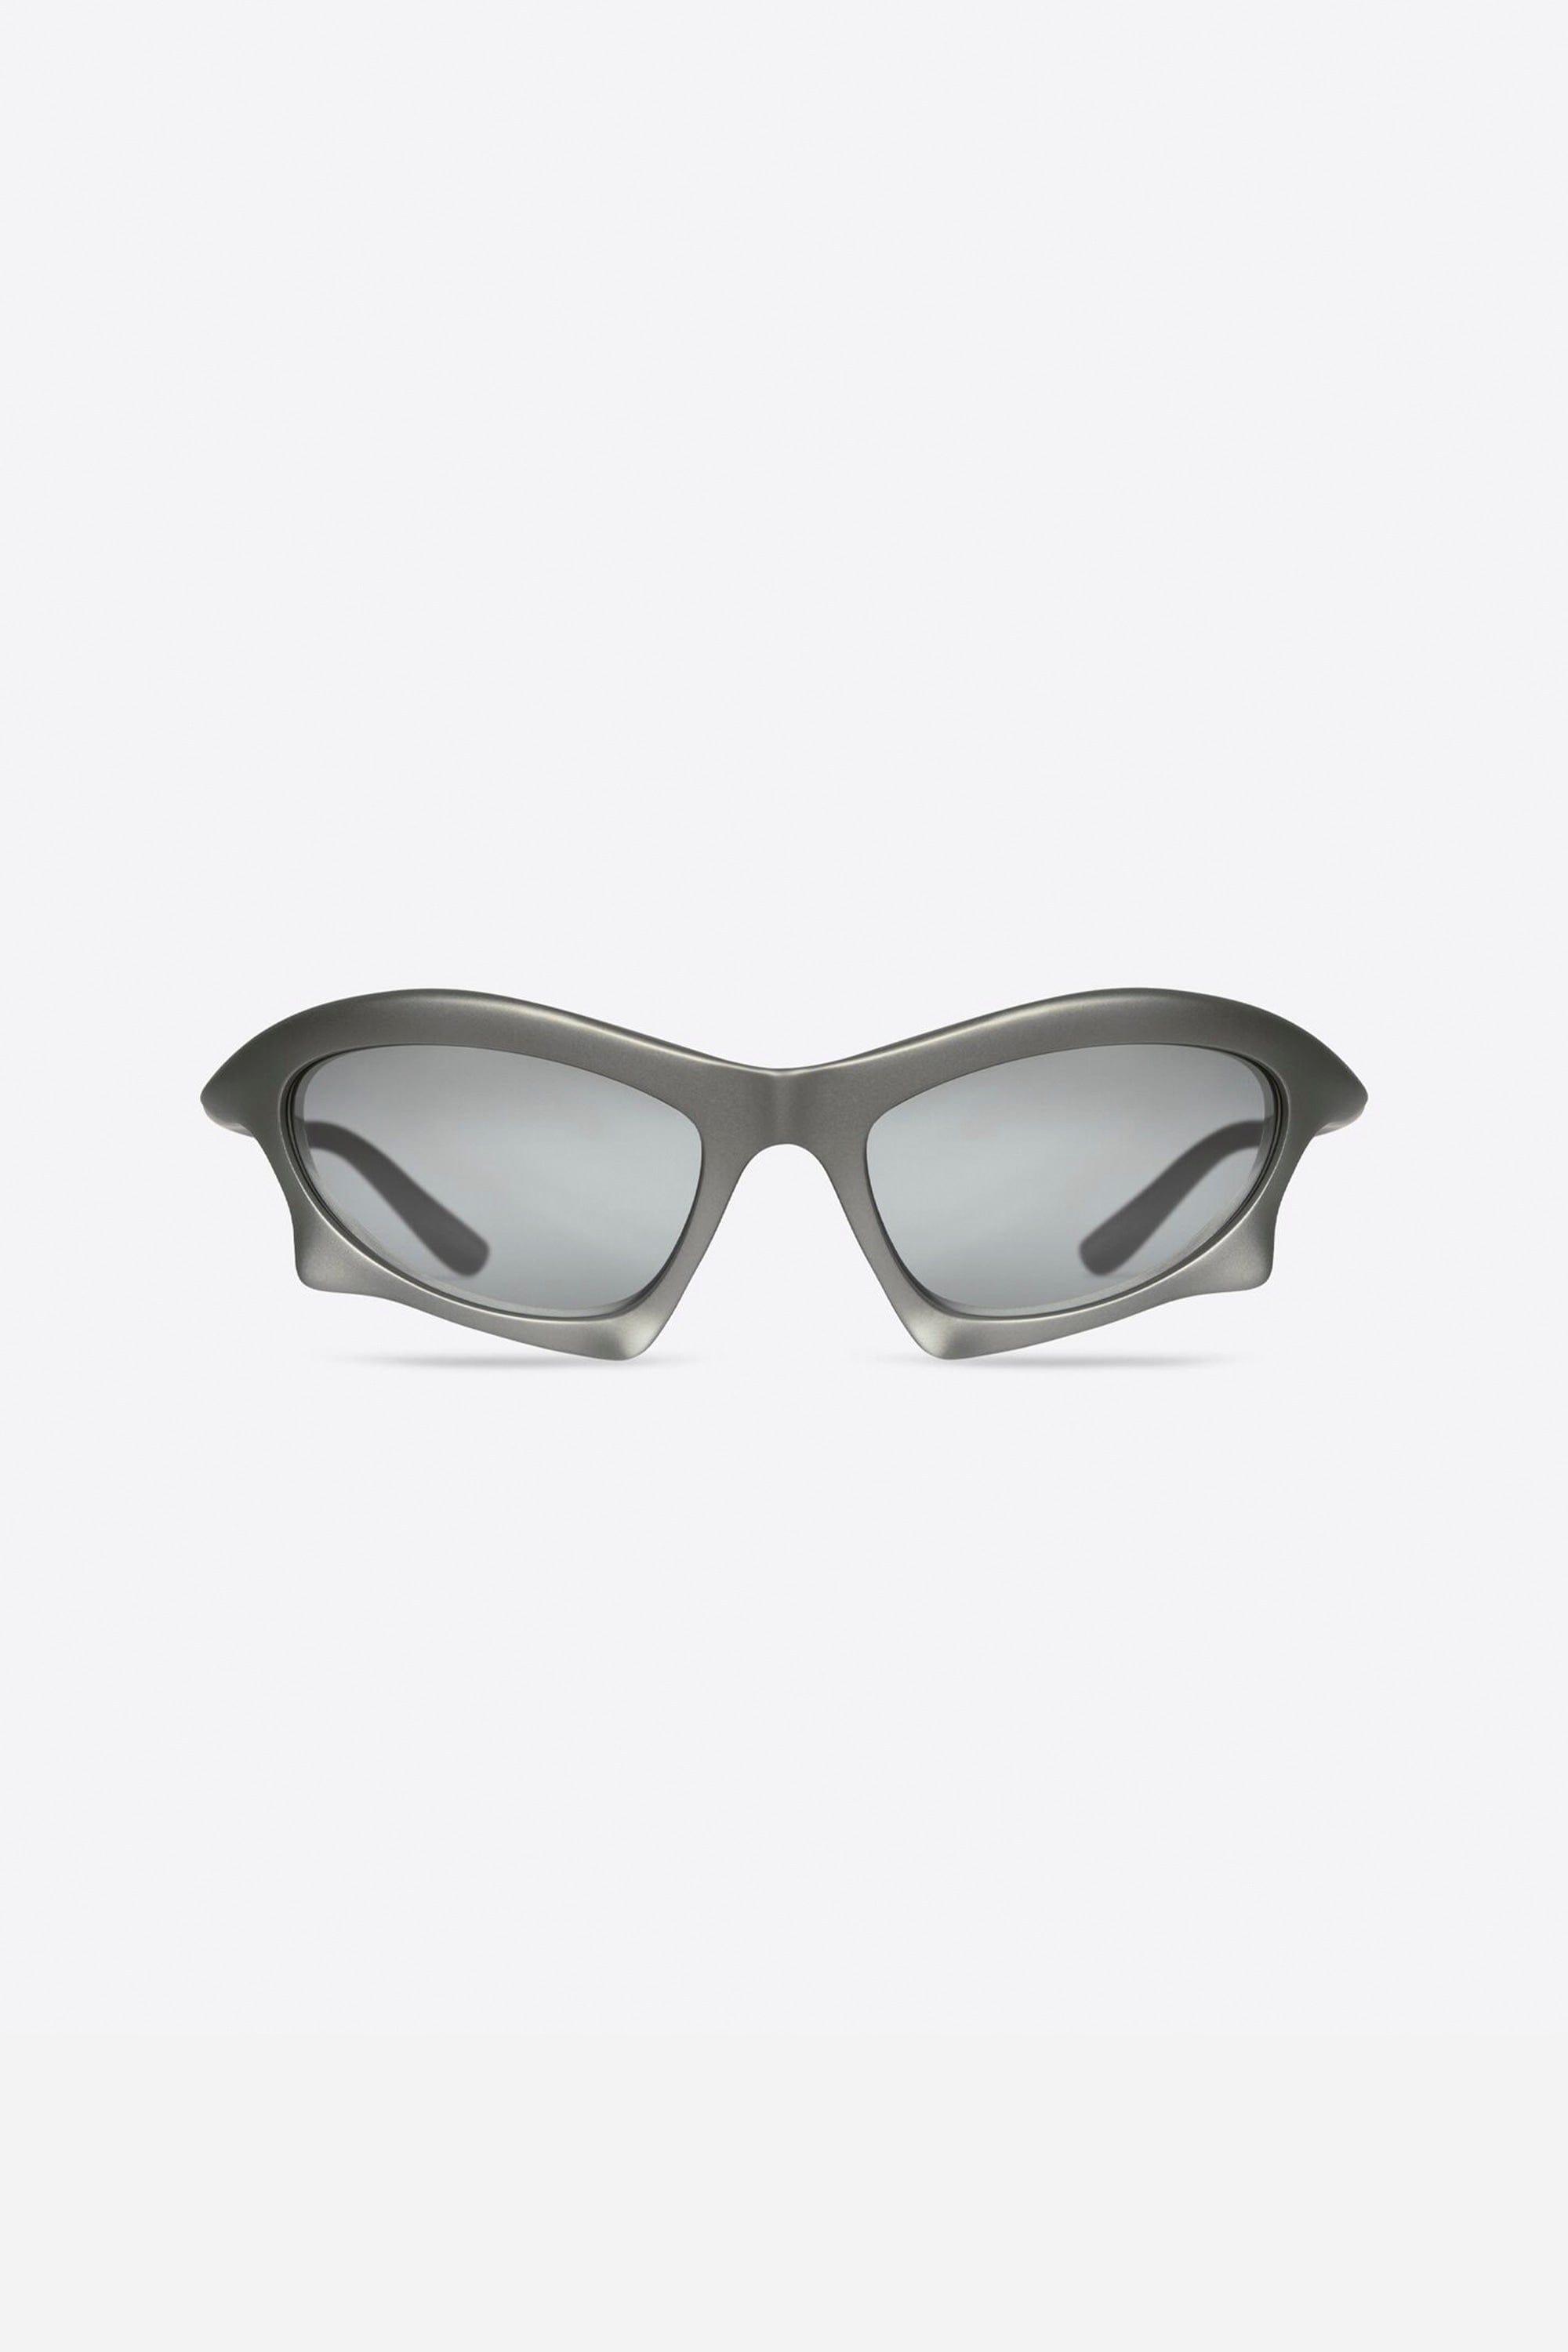 Balenciaga Bat Bb0229s-002 Sunglasses In Silver in Metallic | Lyst